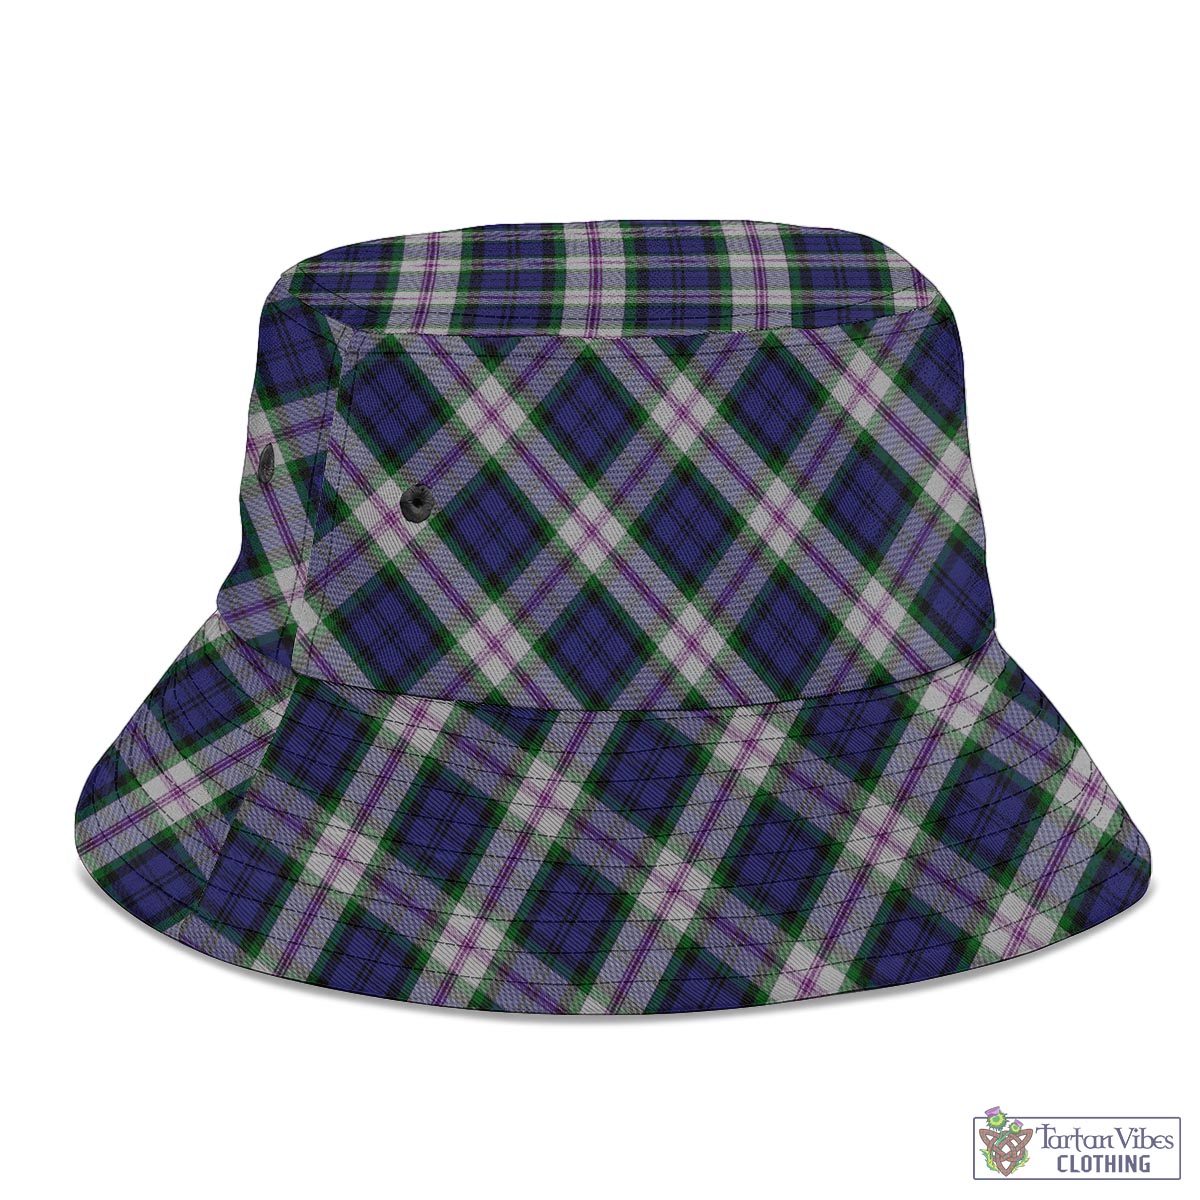 Tartan Vibes Clothing Baird Dress Tartan Bucket Hat